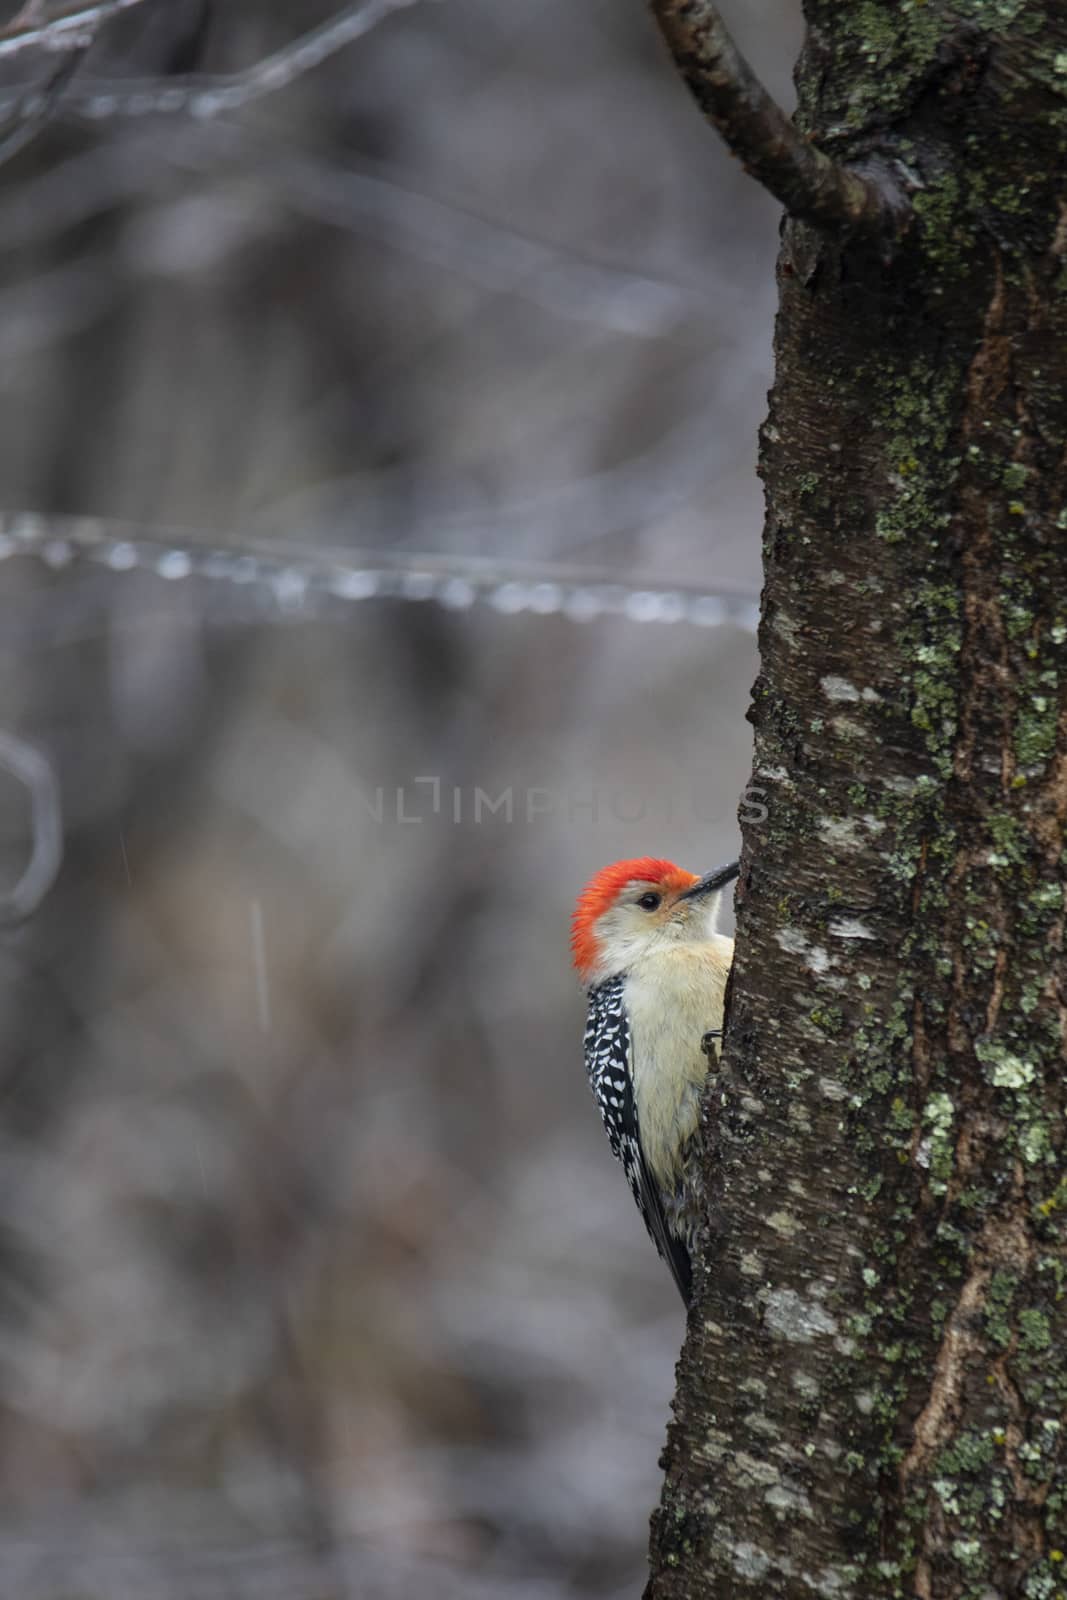 Red-bellied Male Woodpecker On Tree Trunk by CharlieFloyd